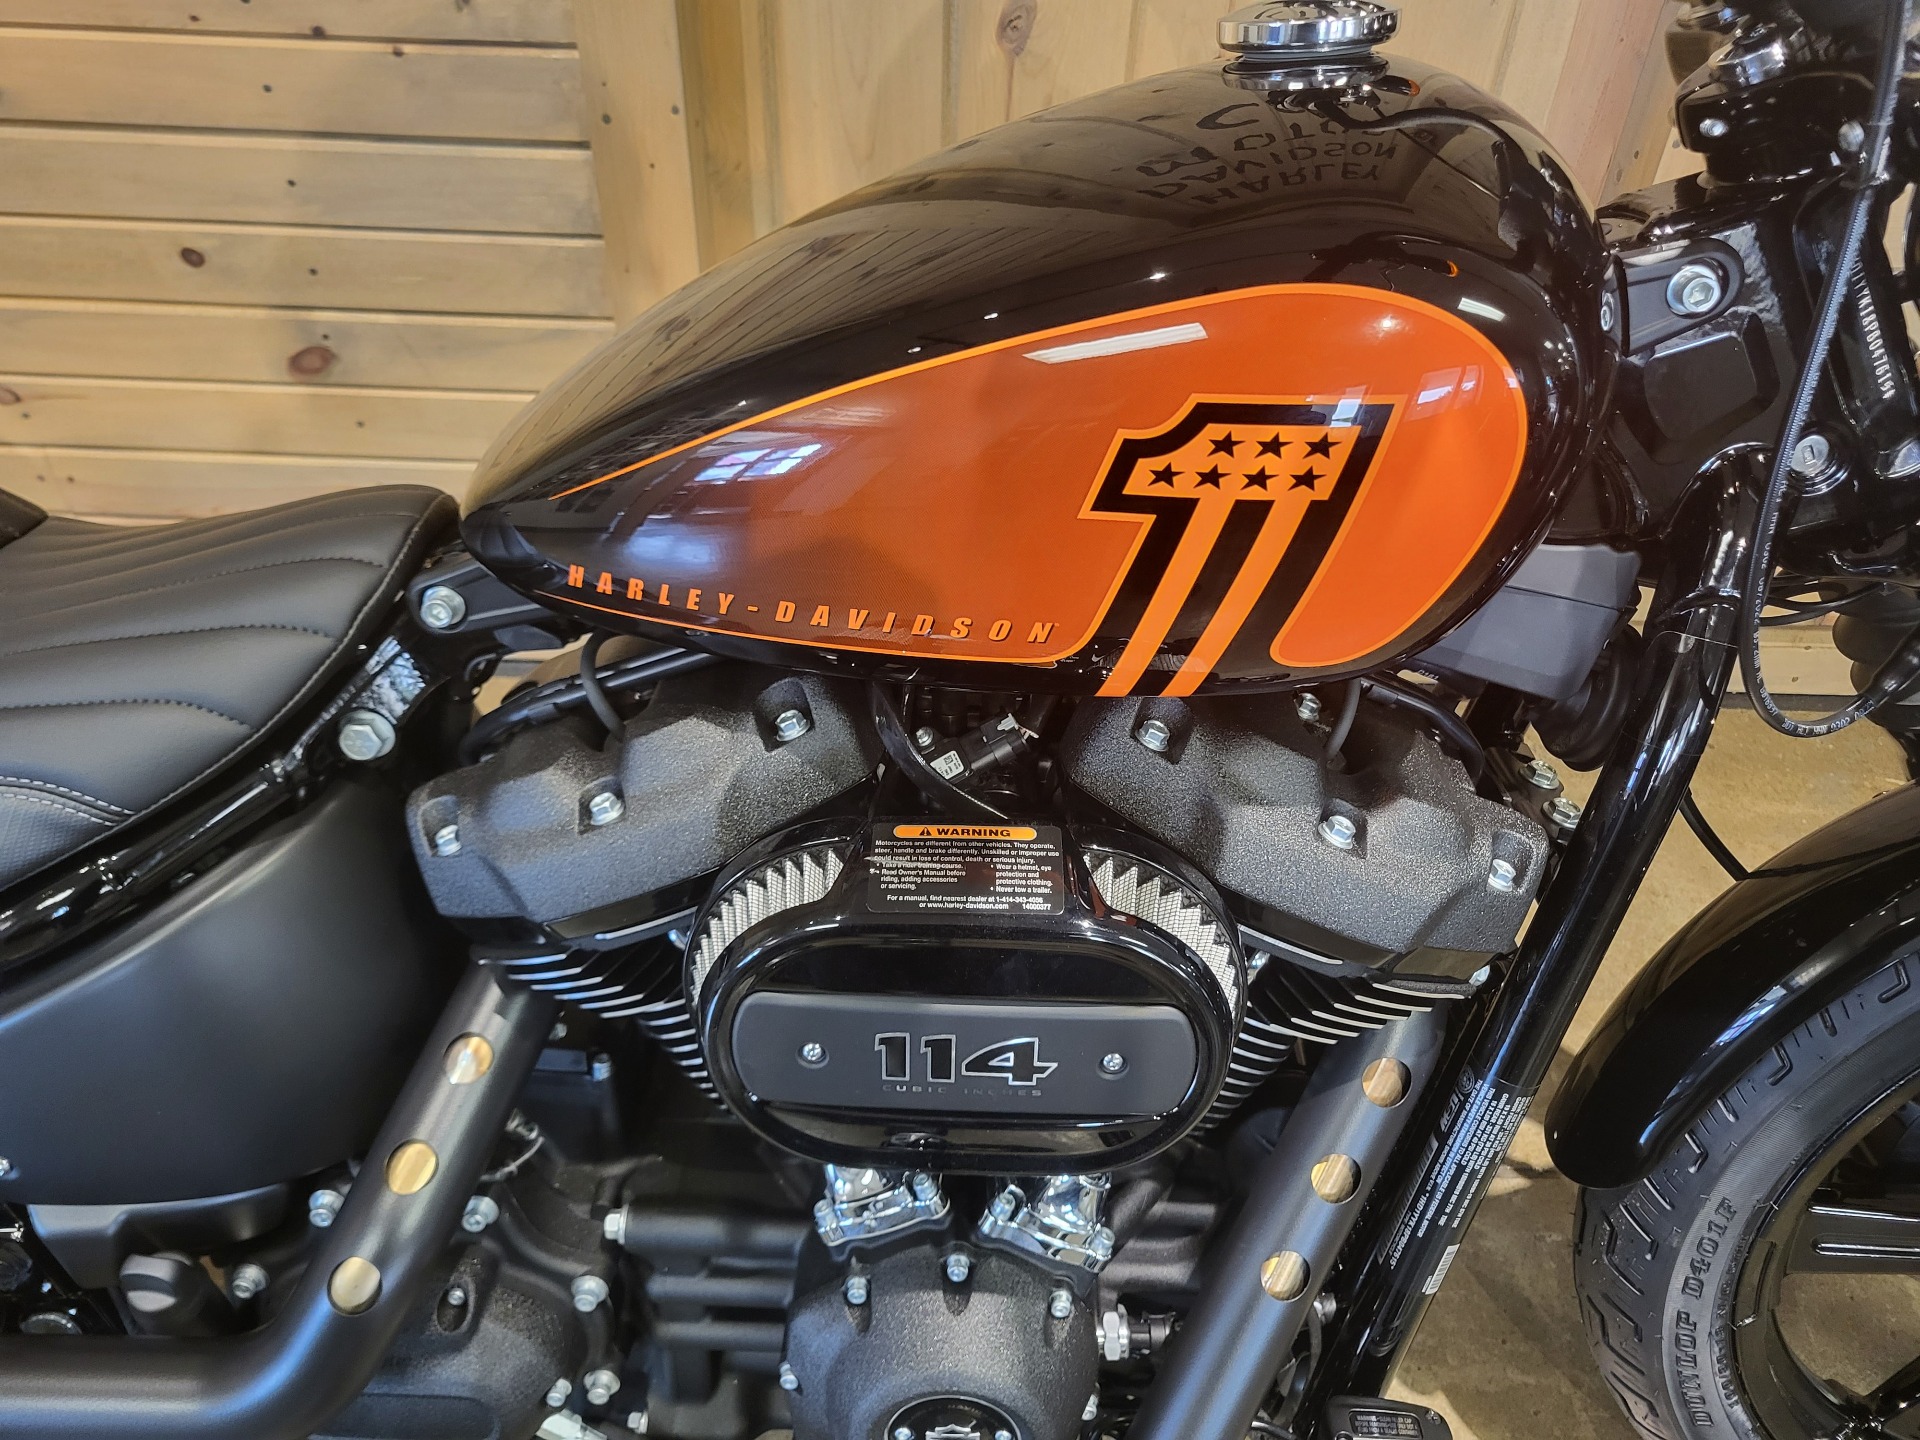 2023 Harley-Davidson Street Bob® 114 in Mentor, Ohio - Photo 2